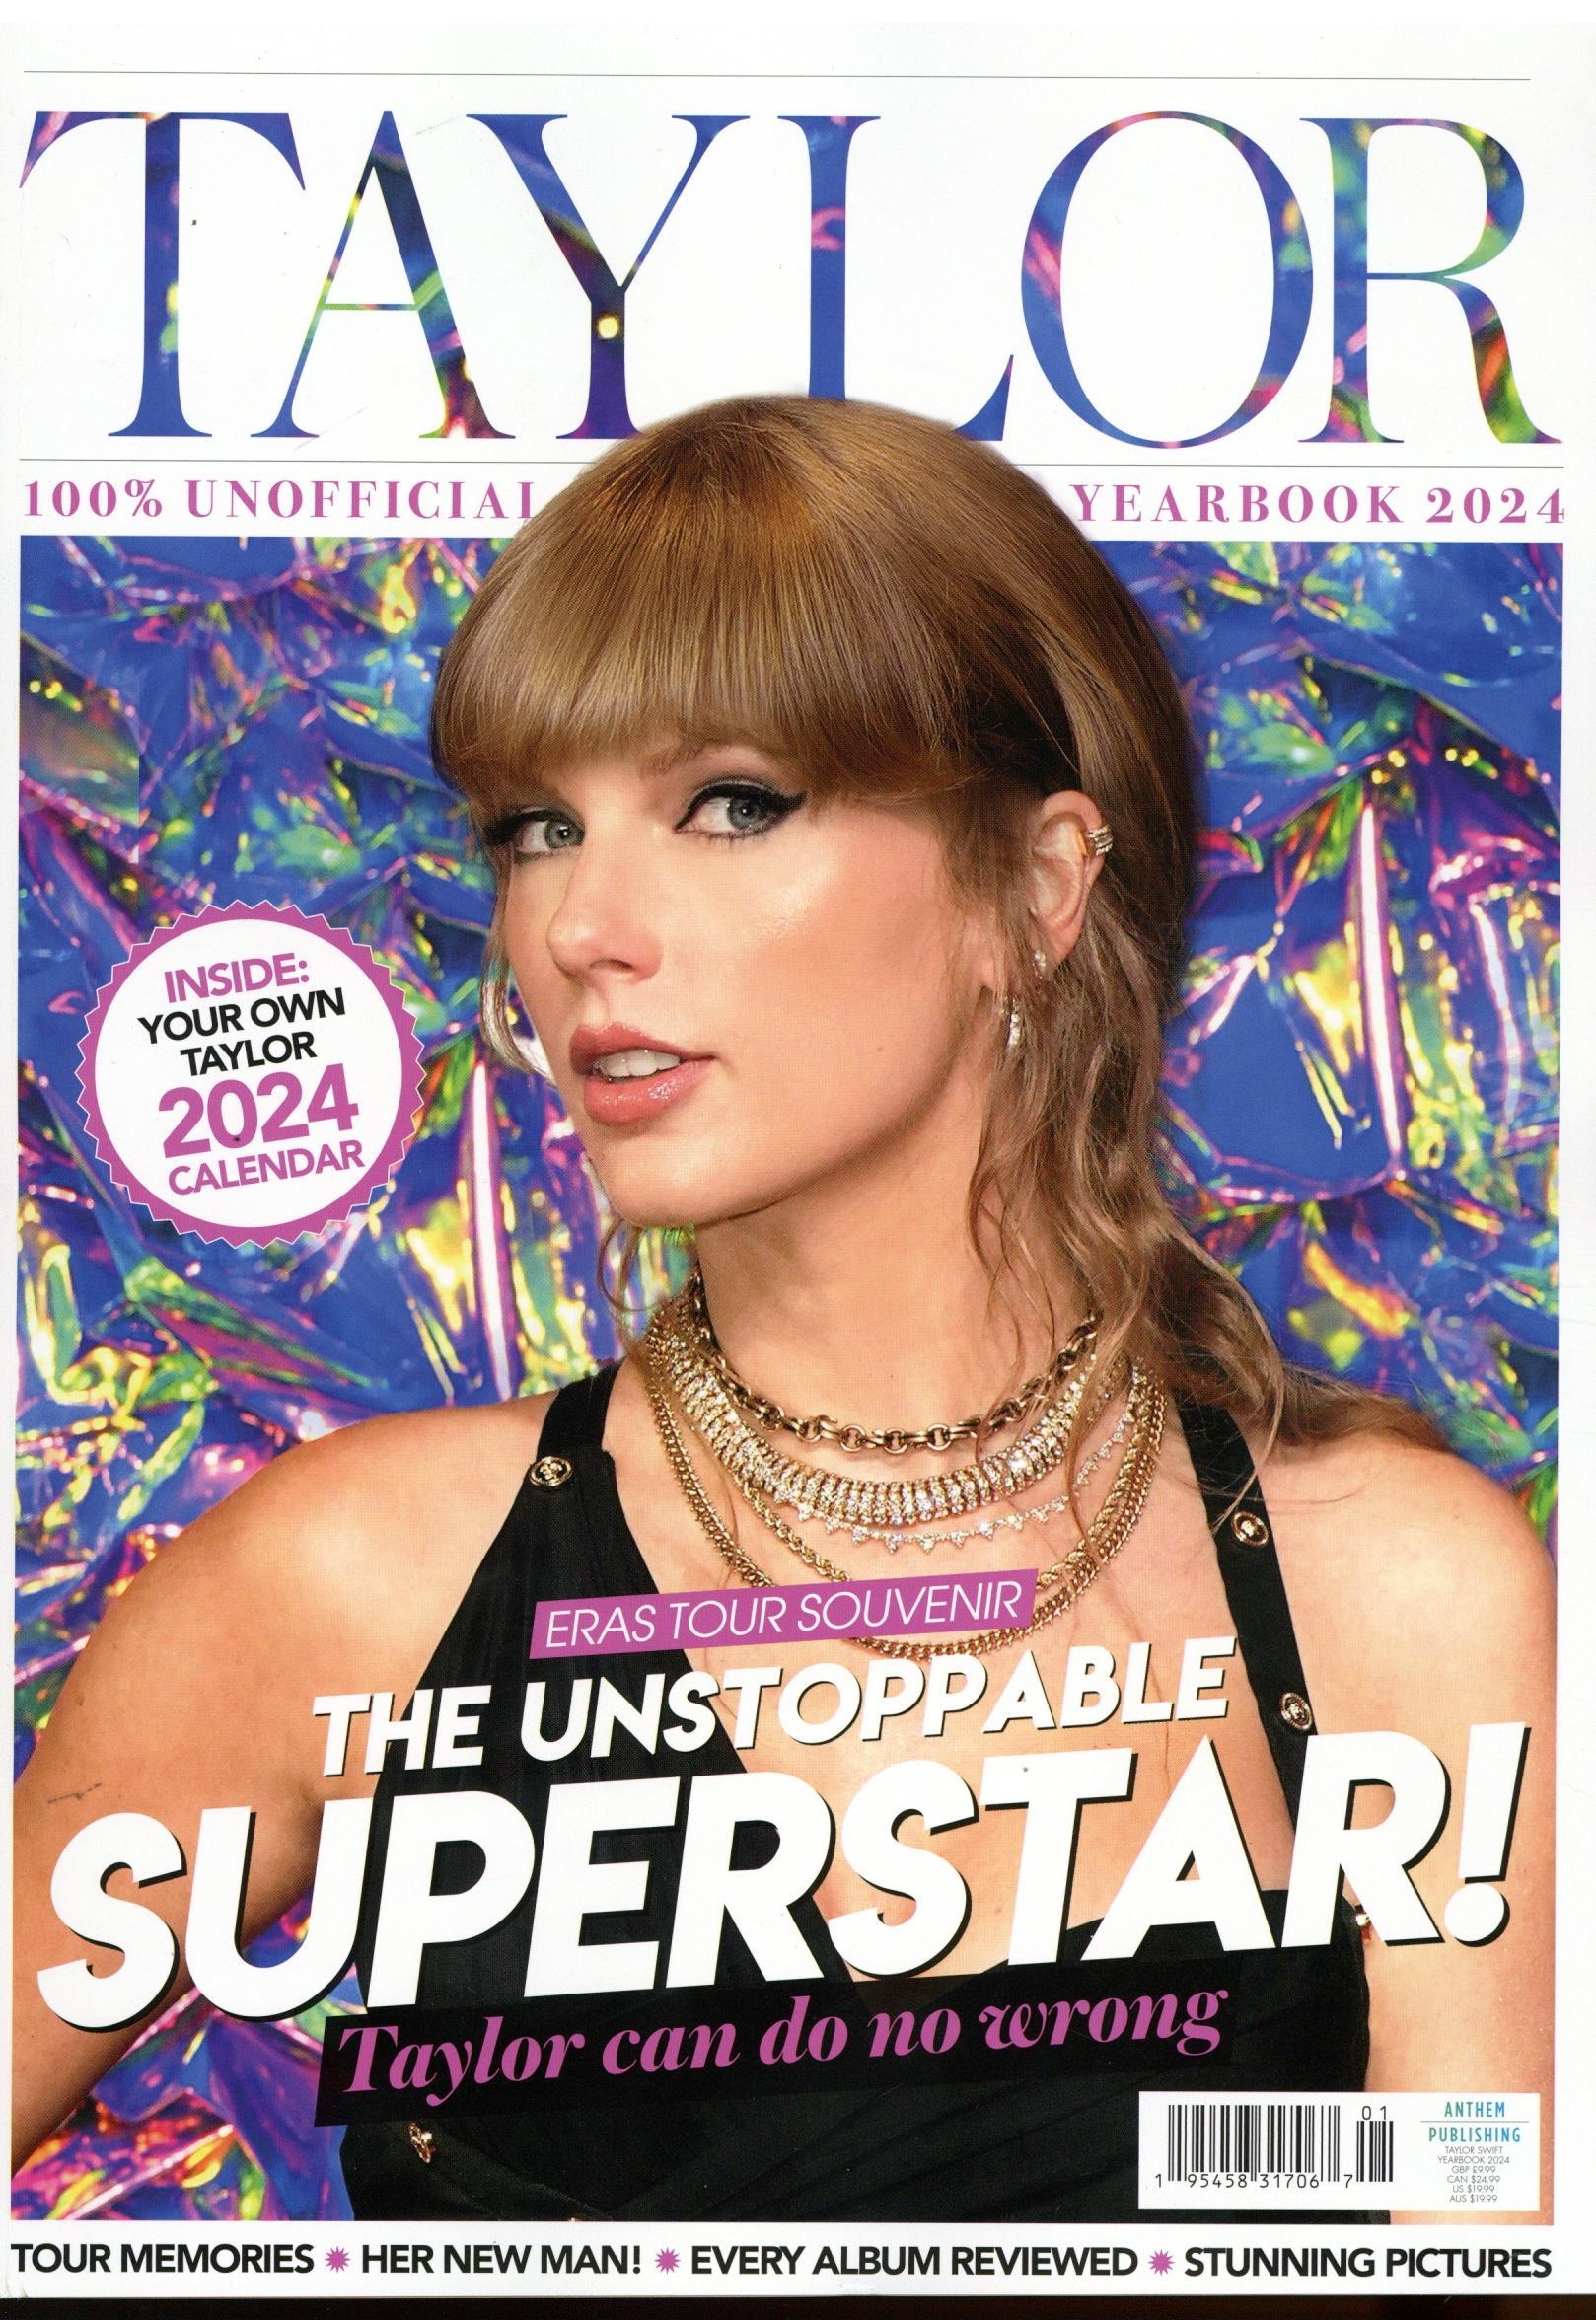 Taylor Swift Yearbook Interpress